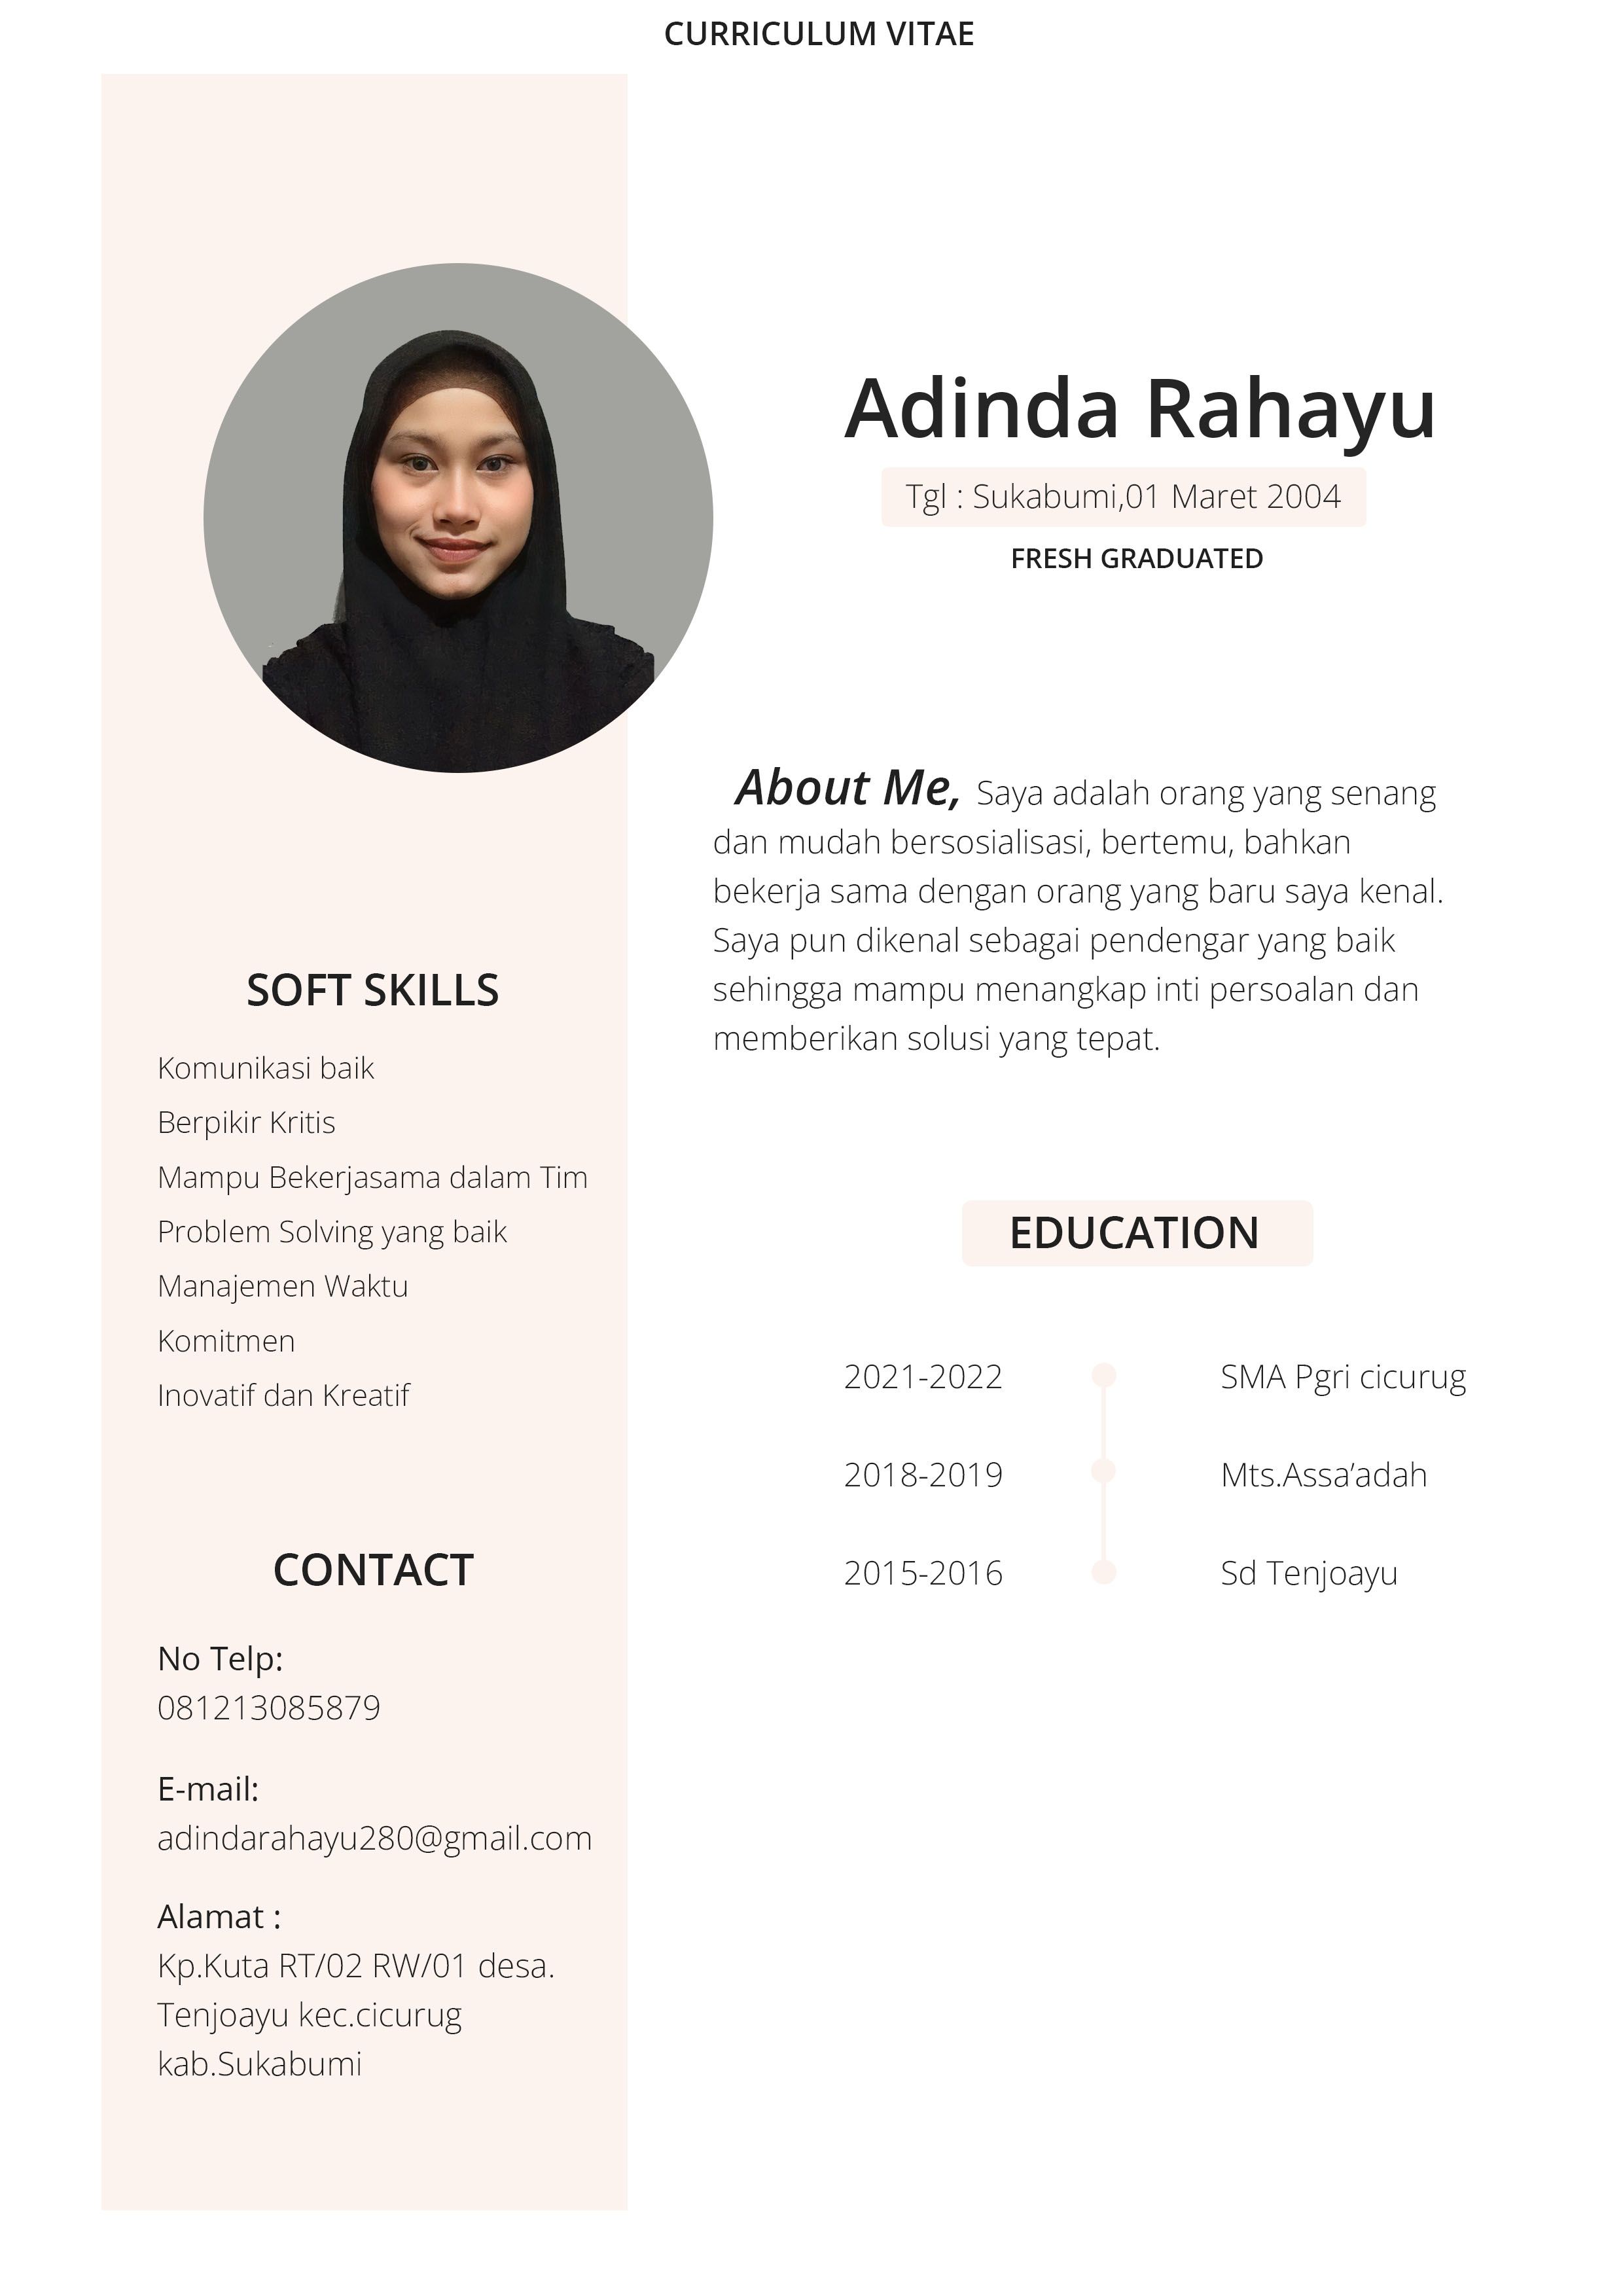 Portfolio & Resume Design from muhamadesa